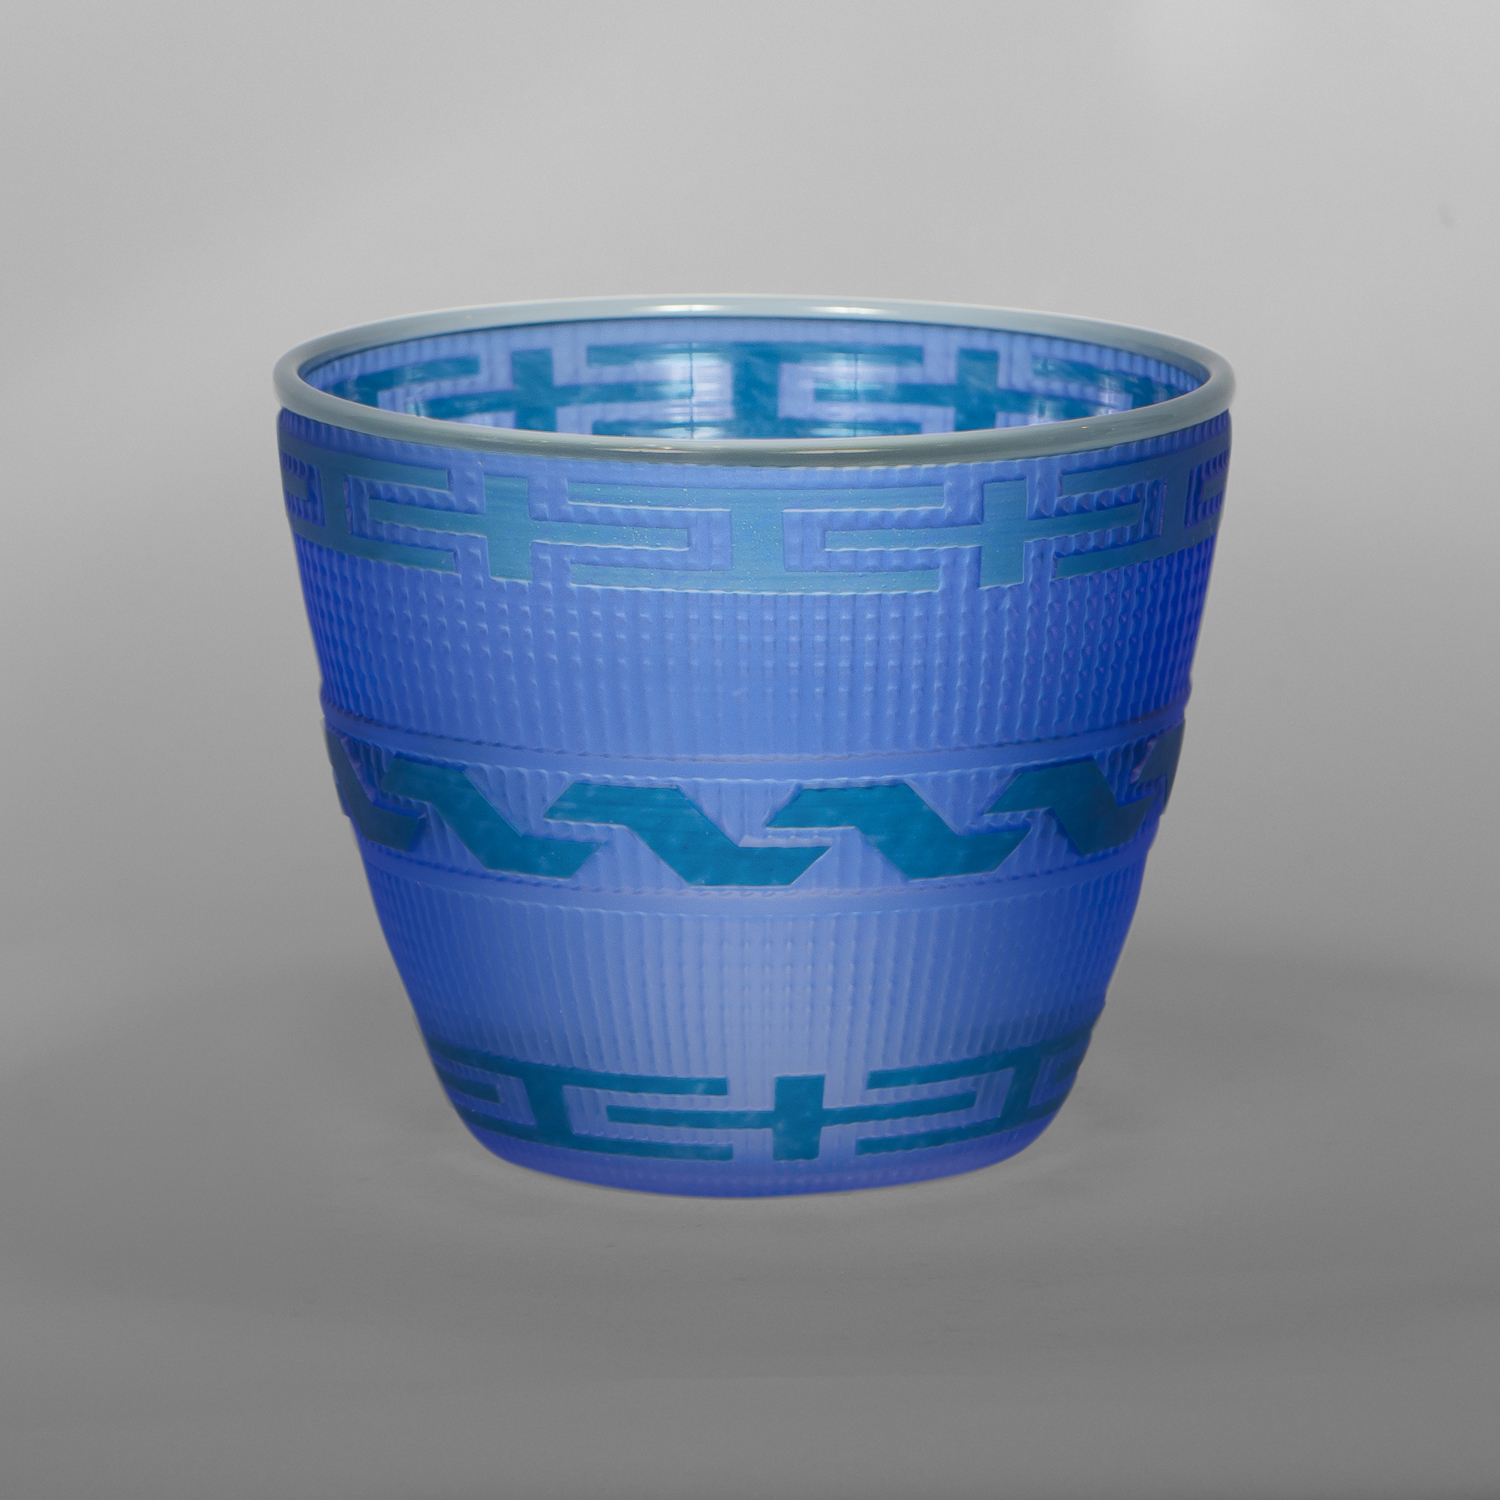 Sky Blue Basket
Preston Singletary
Tlingit
Blown and sand-carved glass
5" x 5¾"
$3000